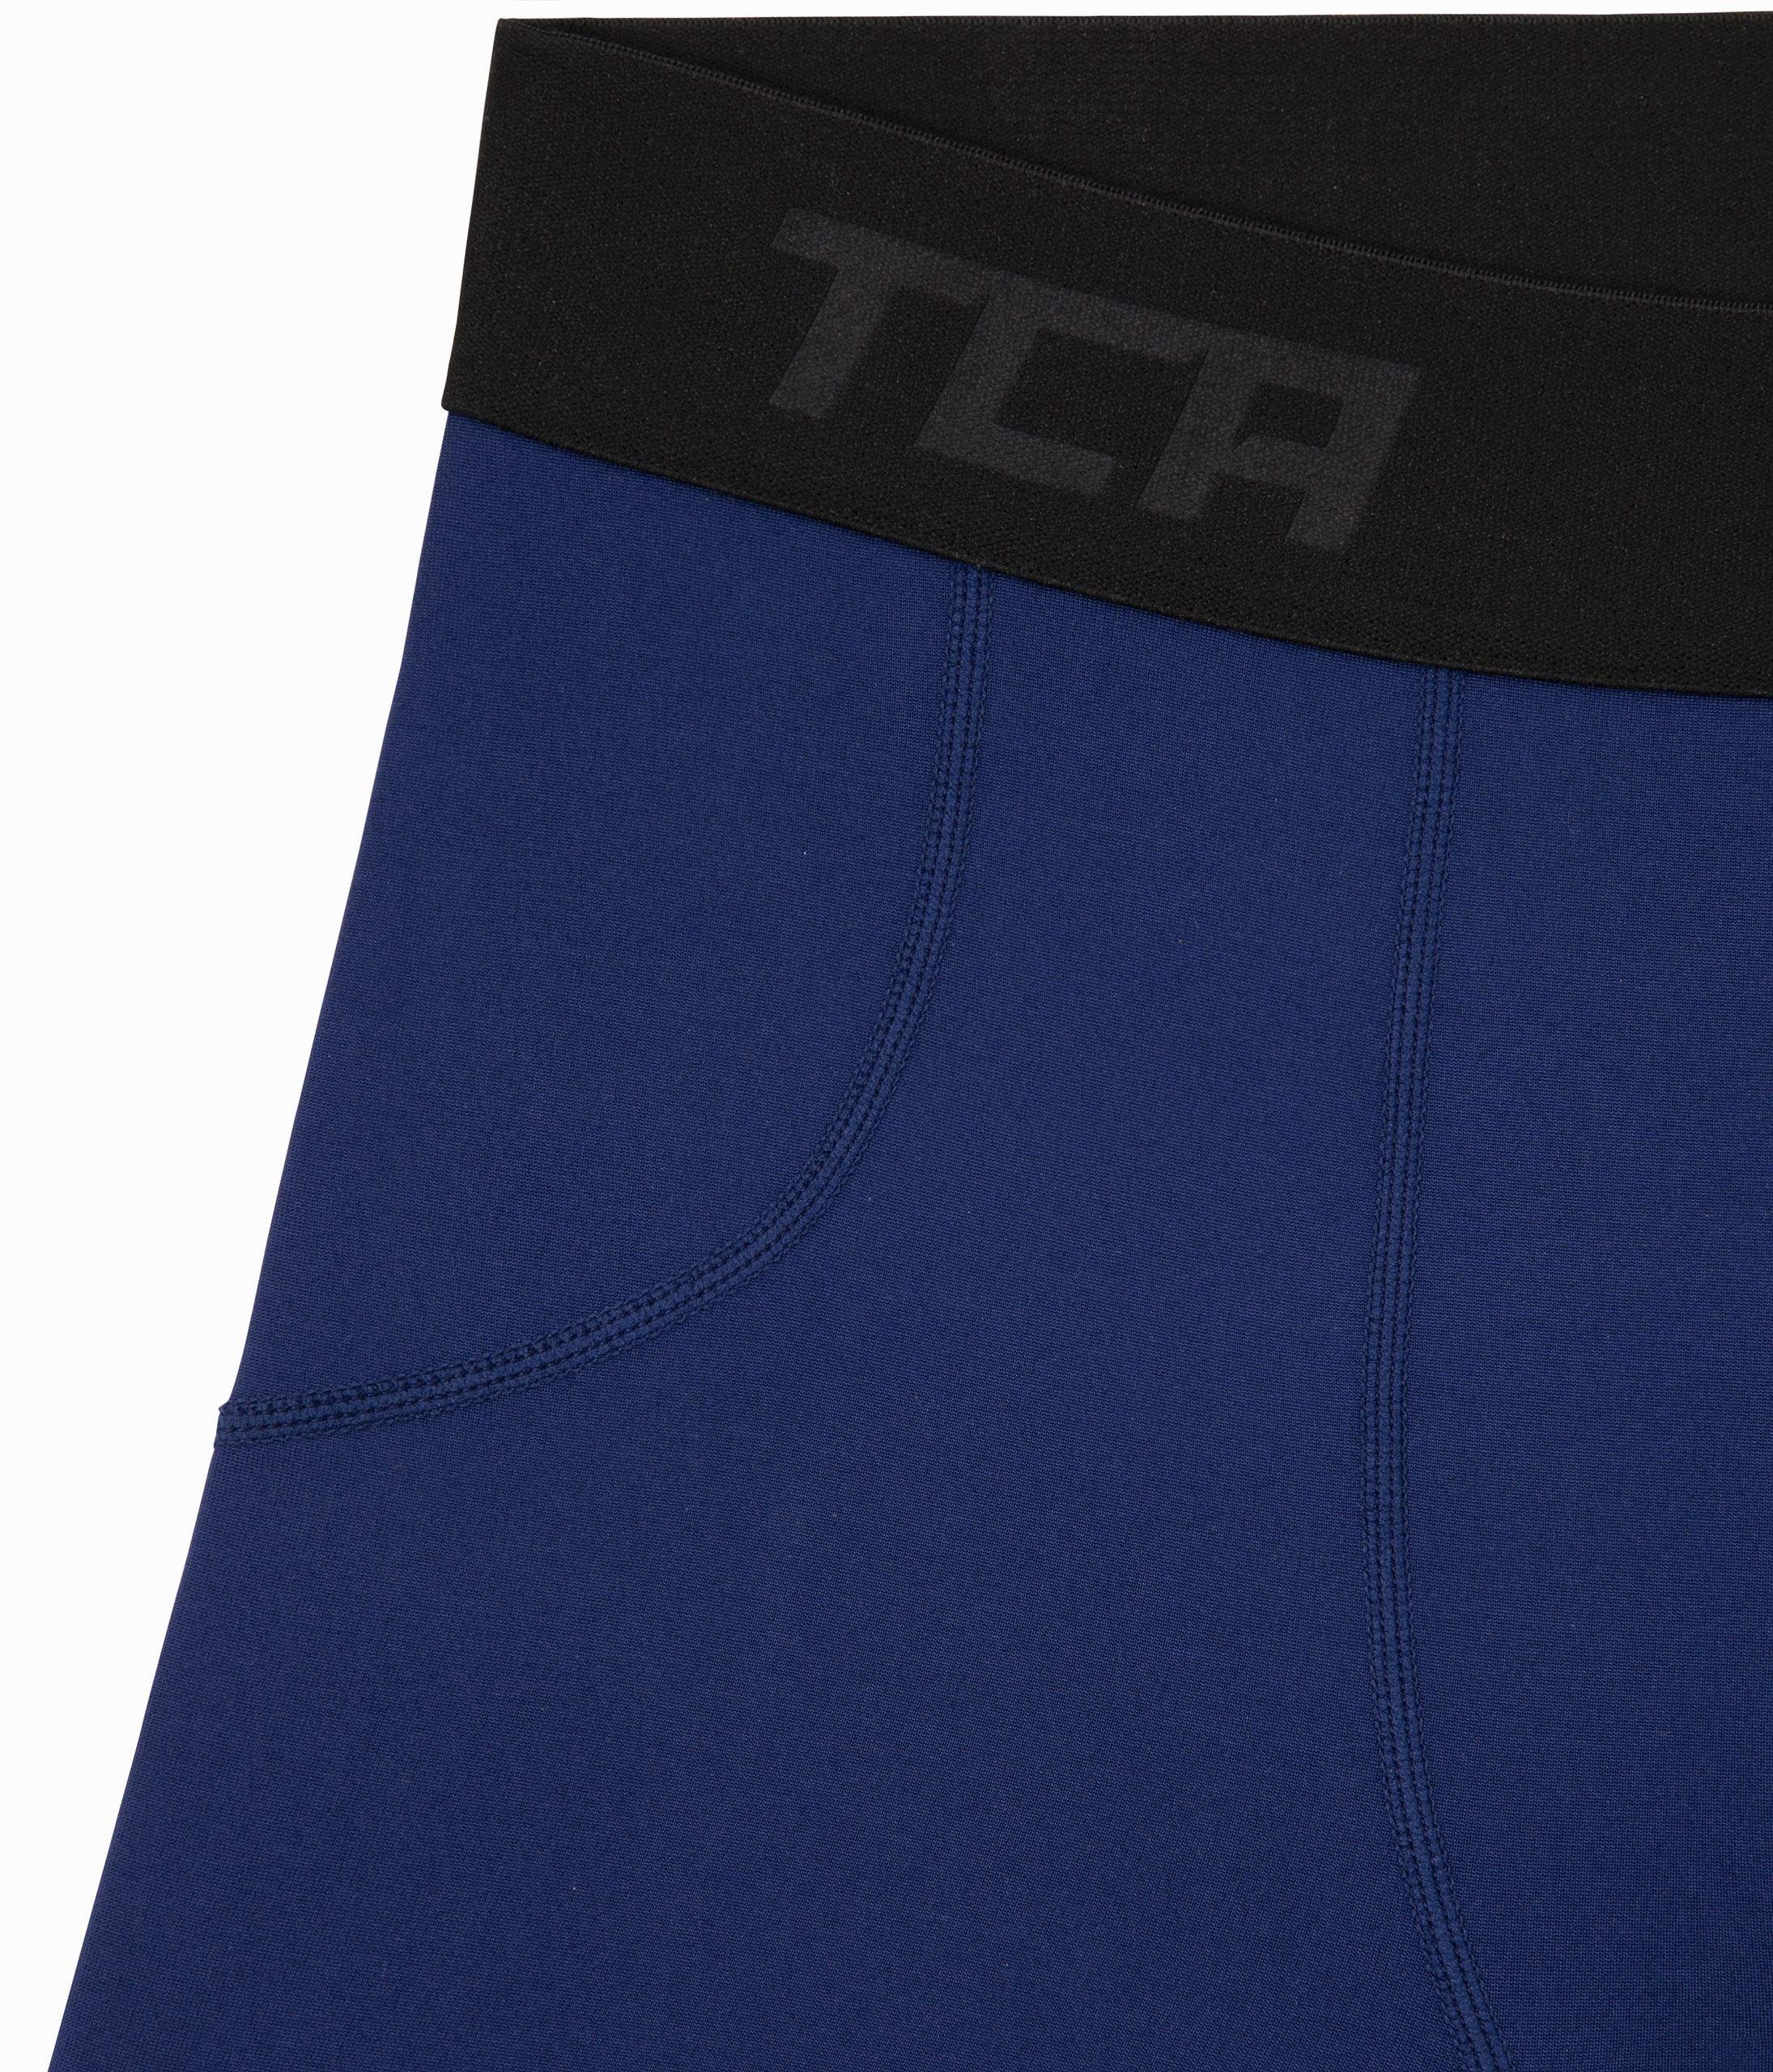 TCA Shorts Unterziehshirt Blau/Schwarz Jungen Kompressions TCA - SuperThermal